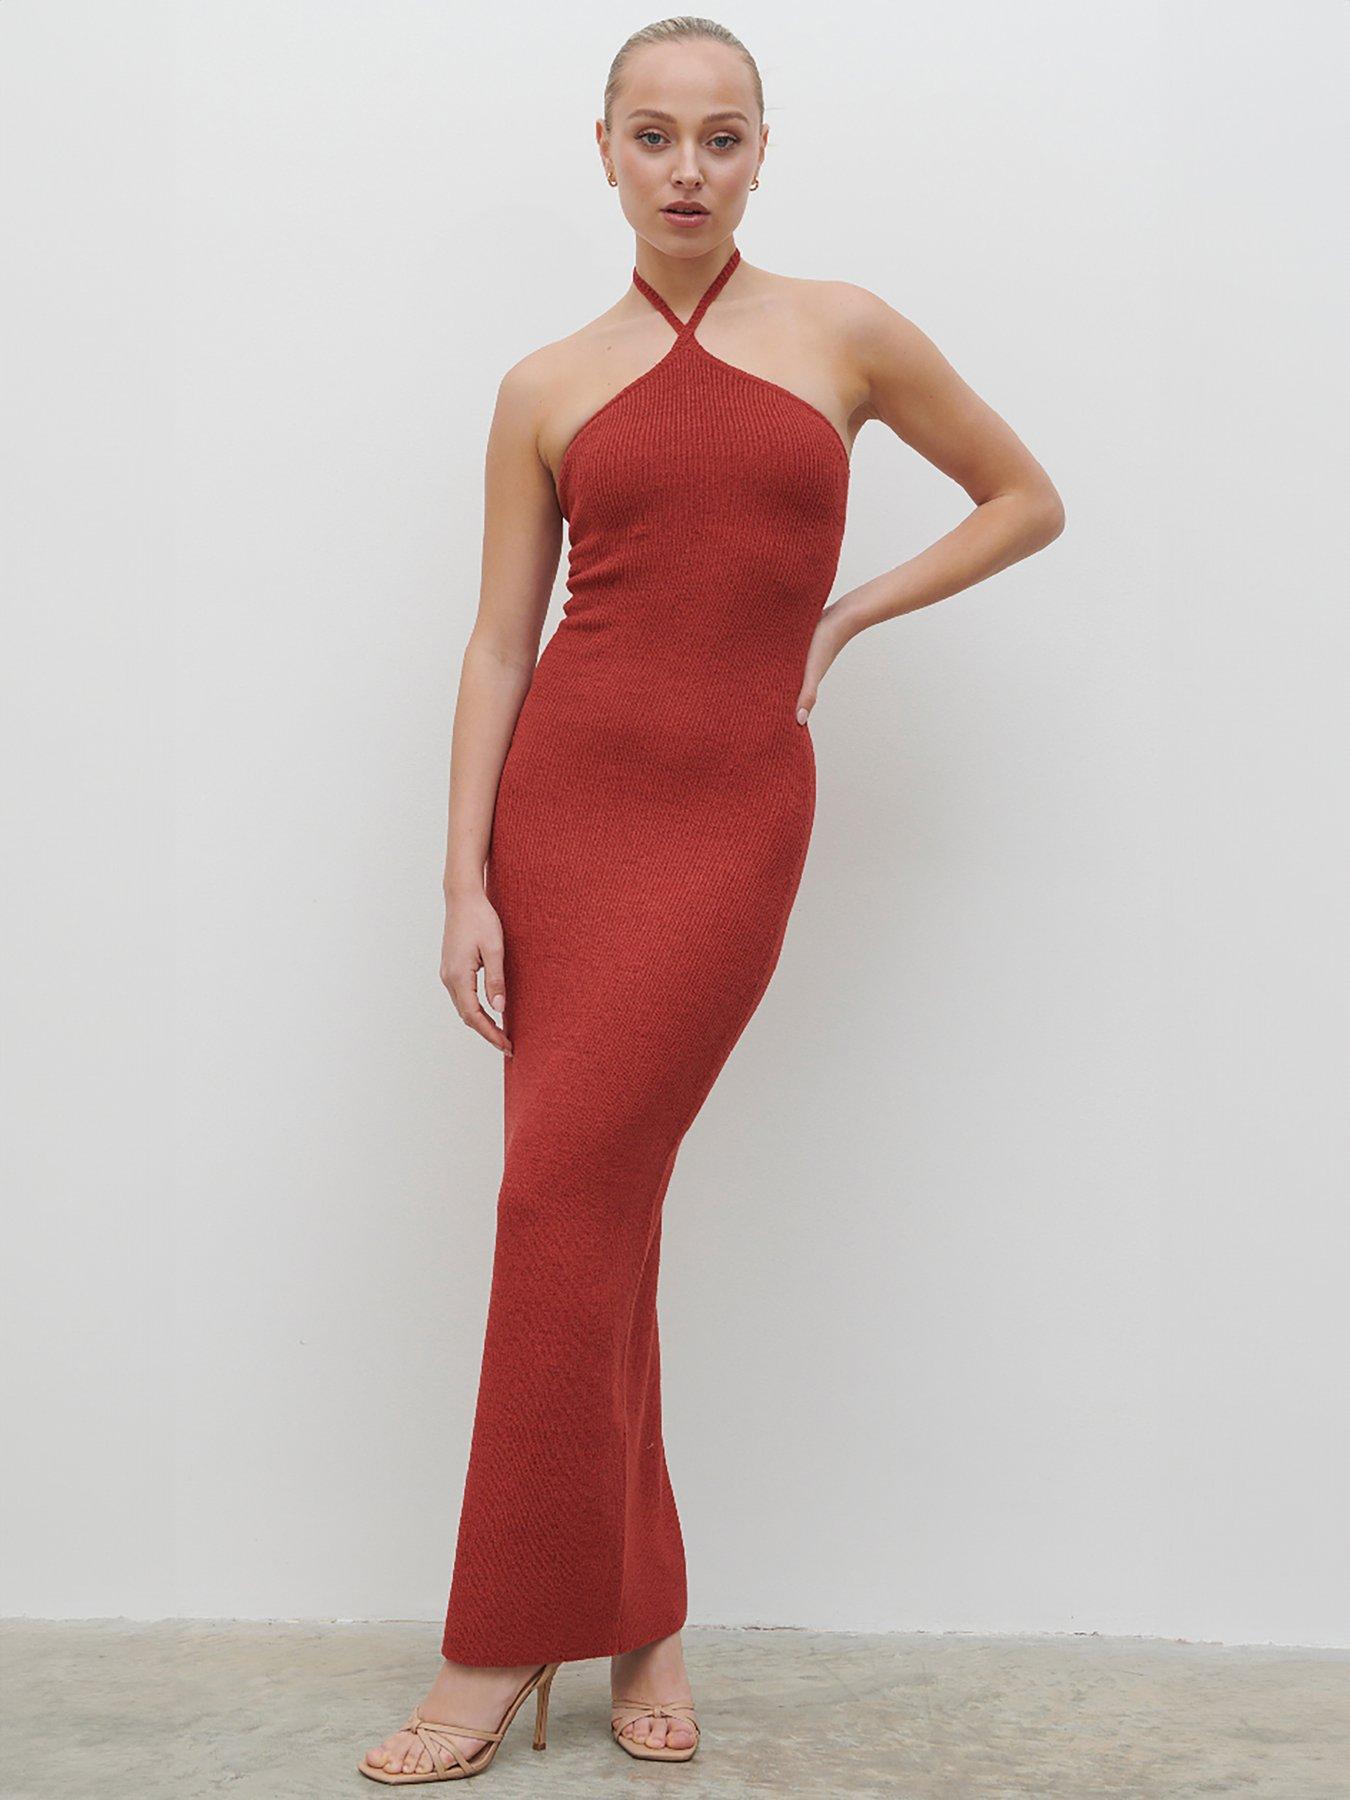 Lavish Premium Red Sheer Lace Corset Dress